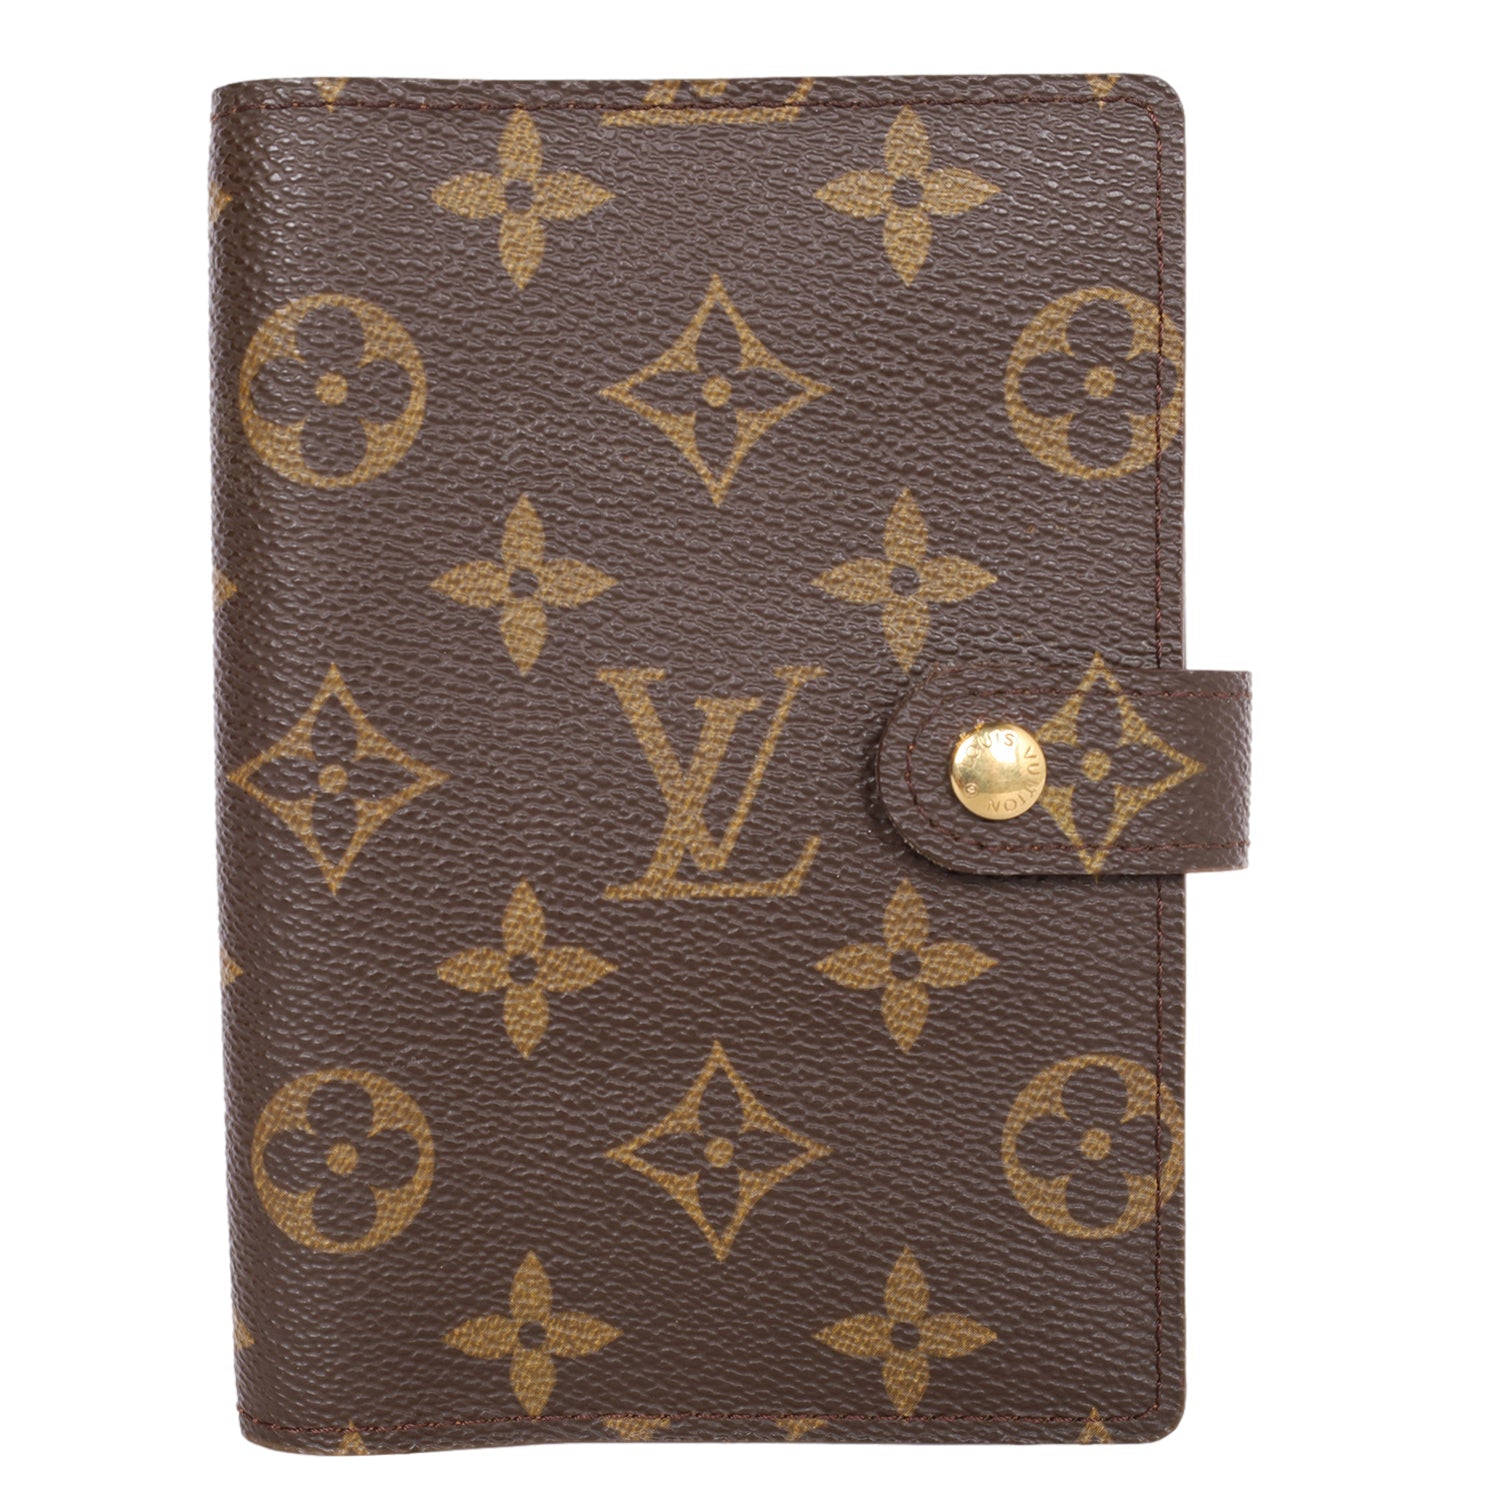 Authentic Louis Vuitton Monogram Pocket Agenda Cover